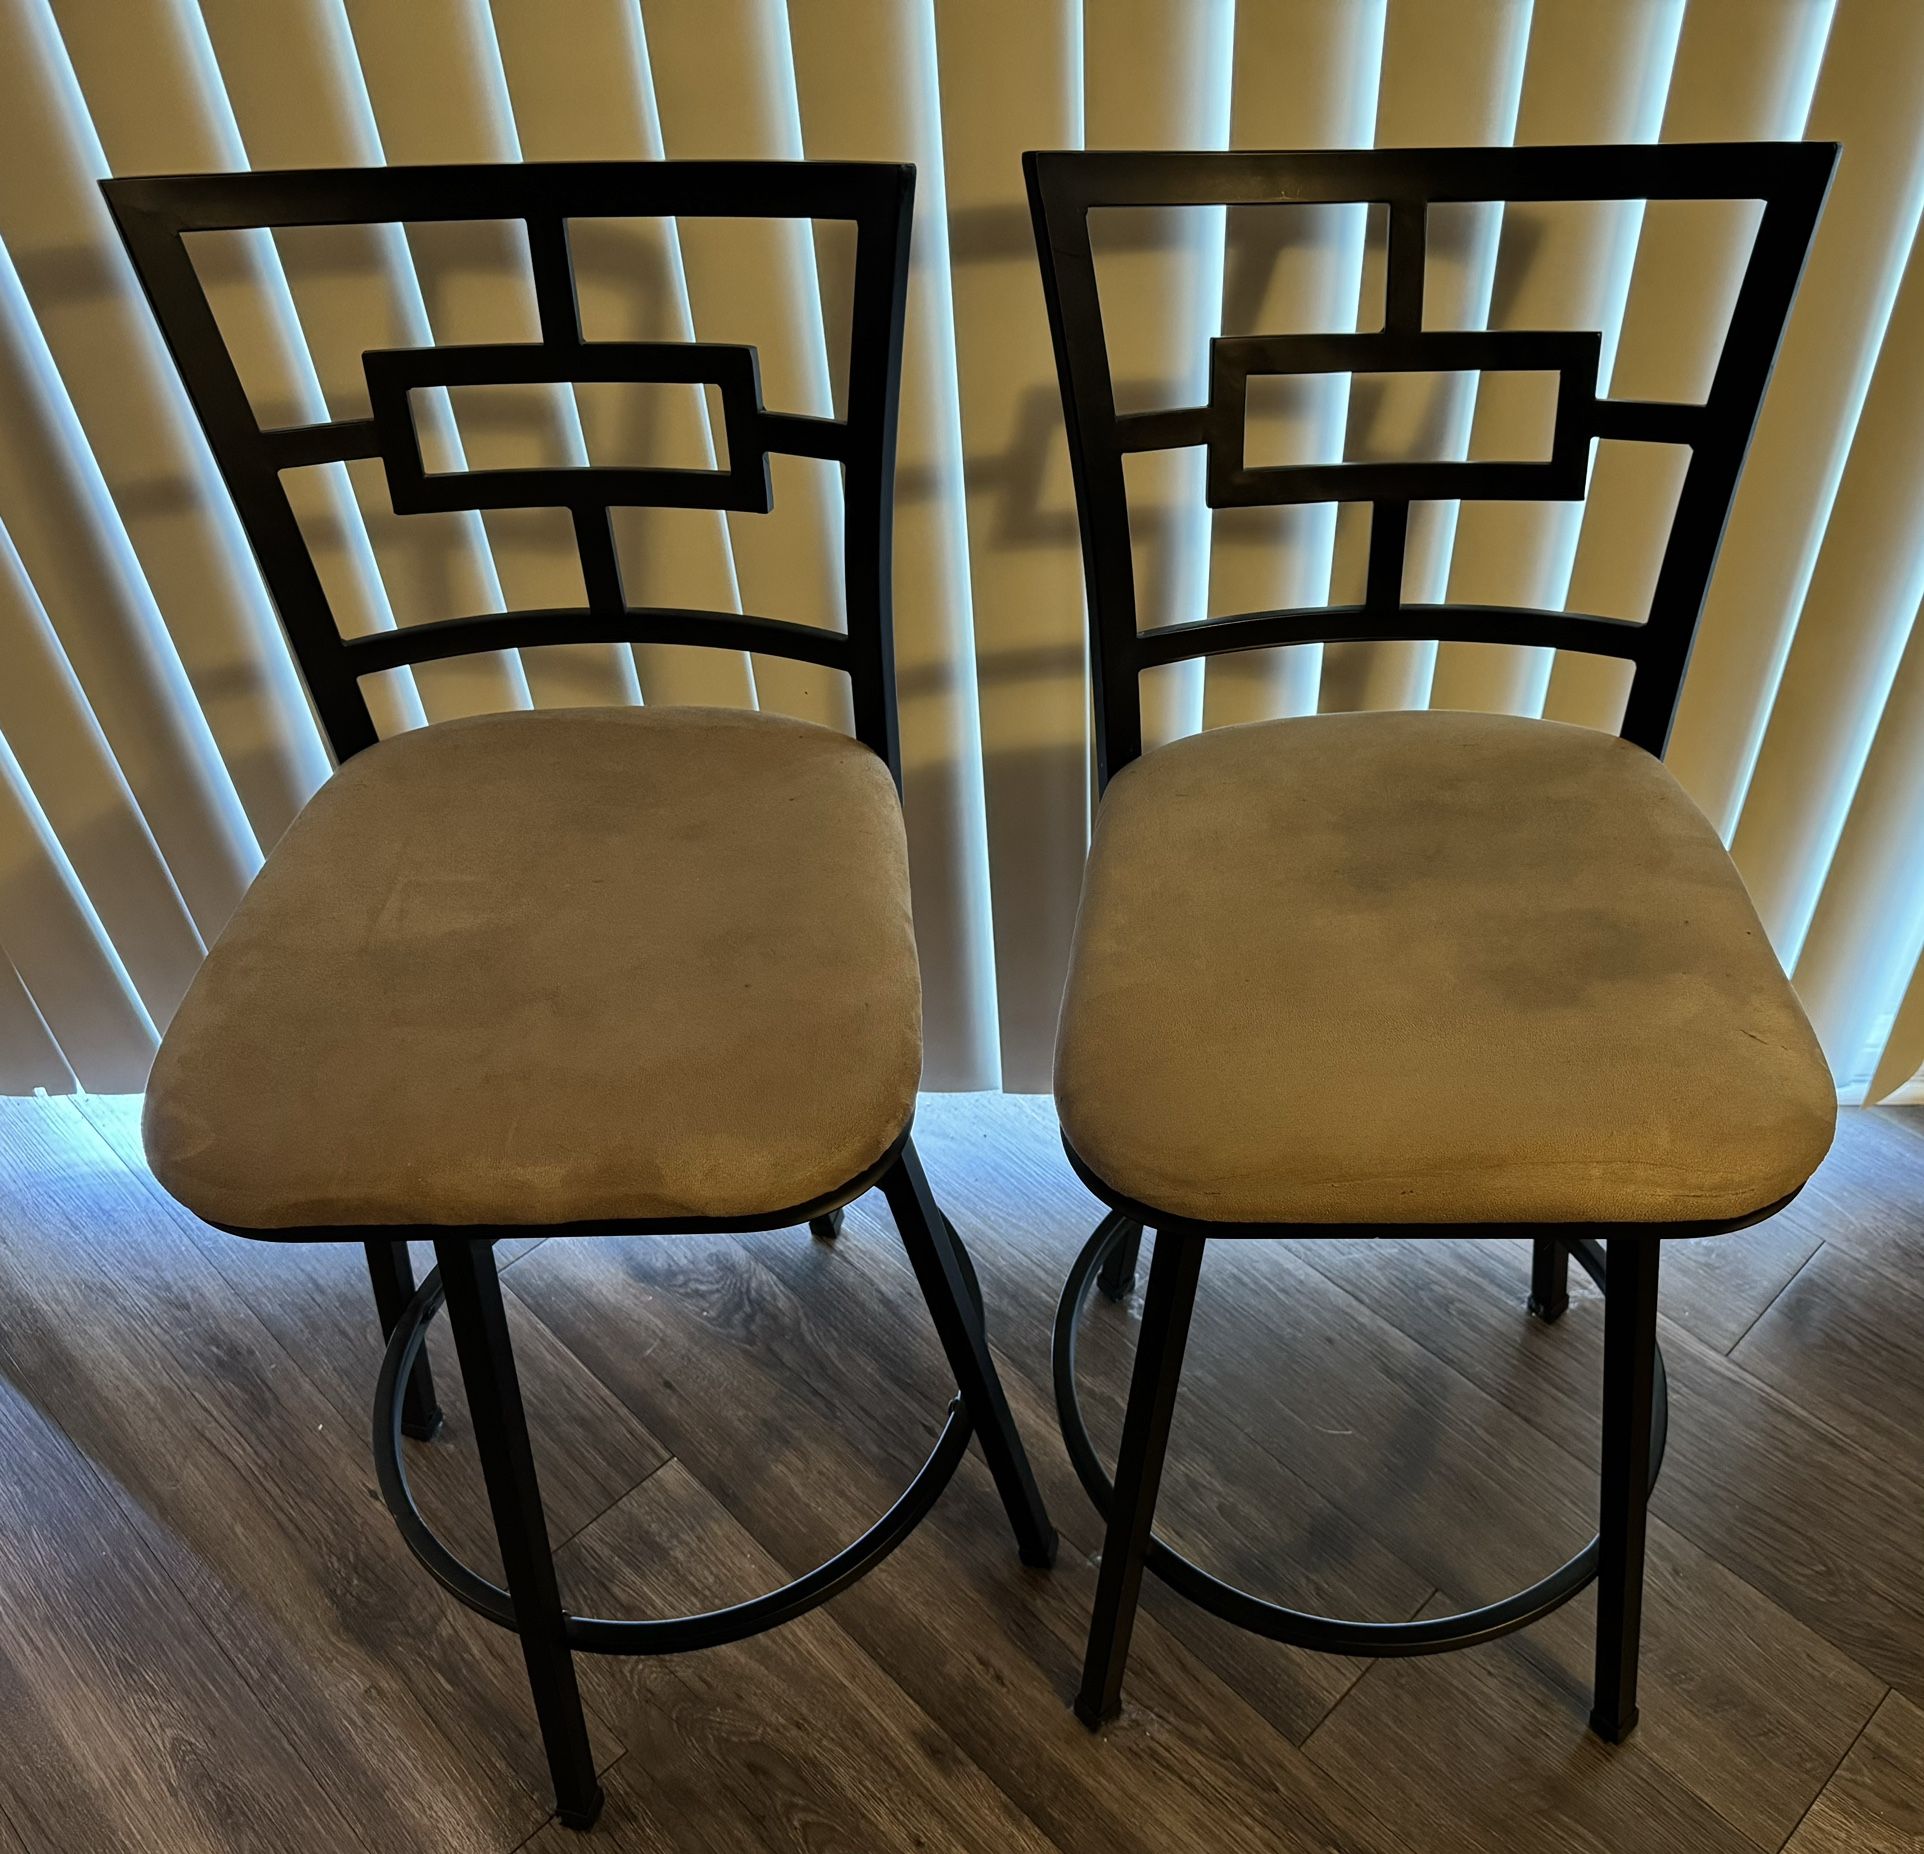 Barstool Chairs (2 chairs)